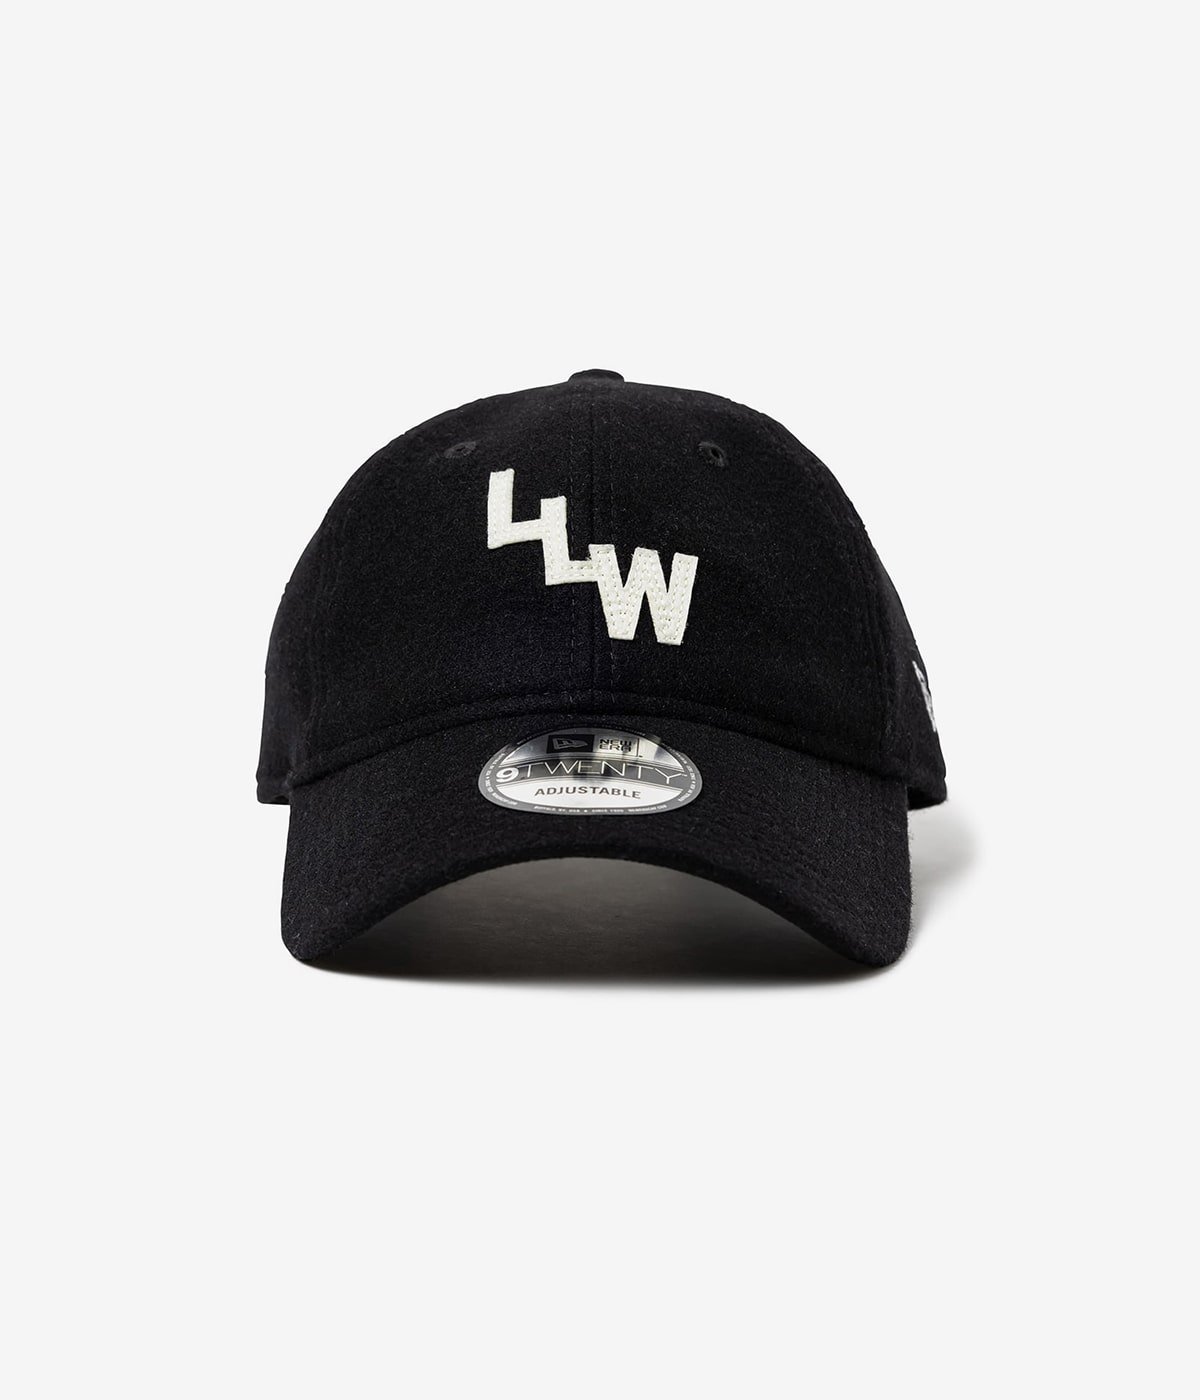 9TWENTY / CAP / WONY. FLANNEL. NEWERA®帽子